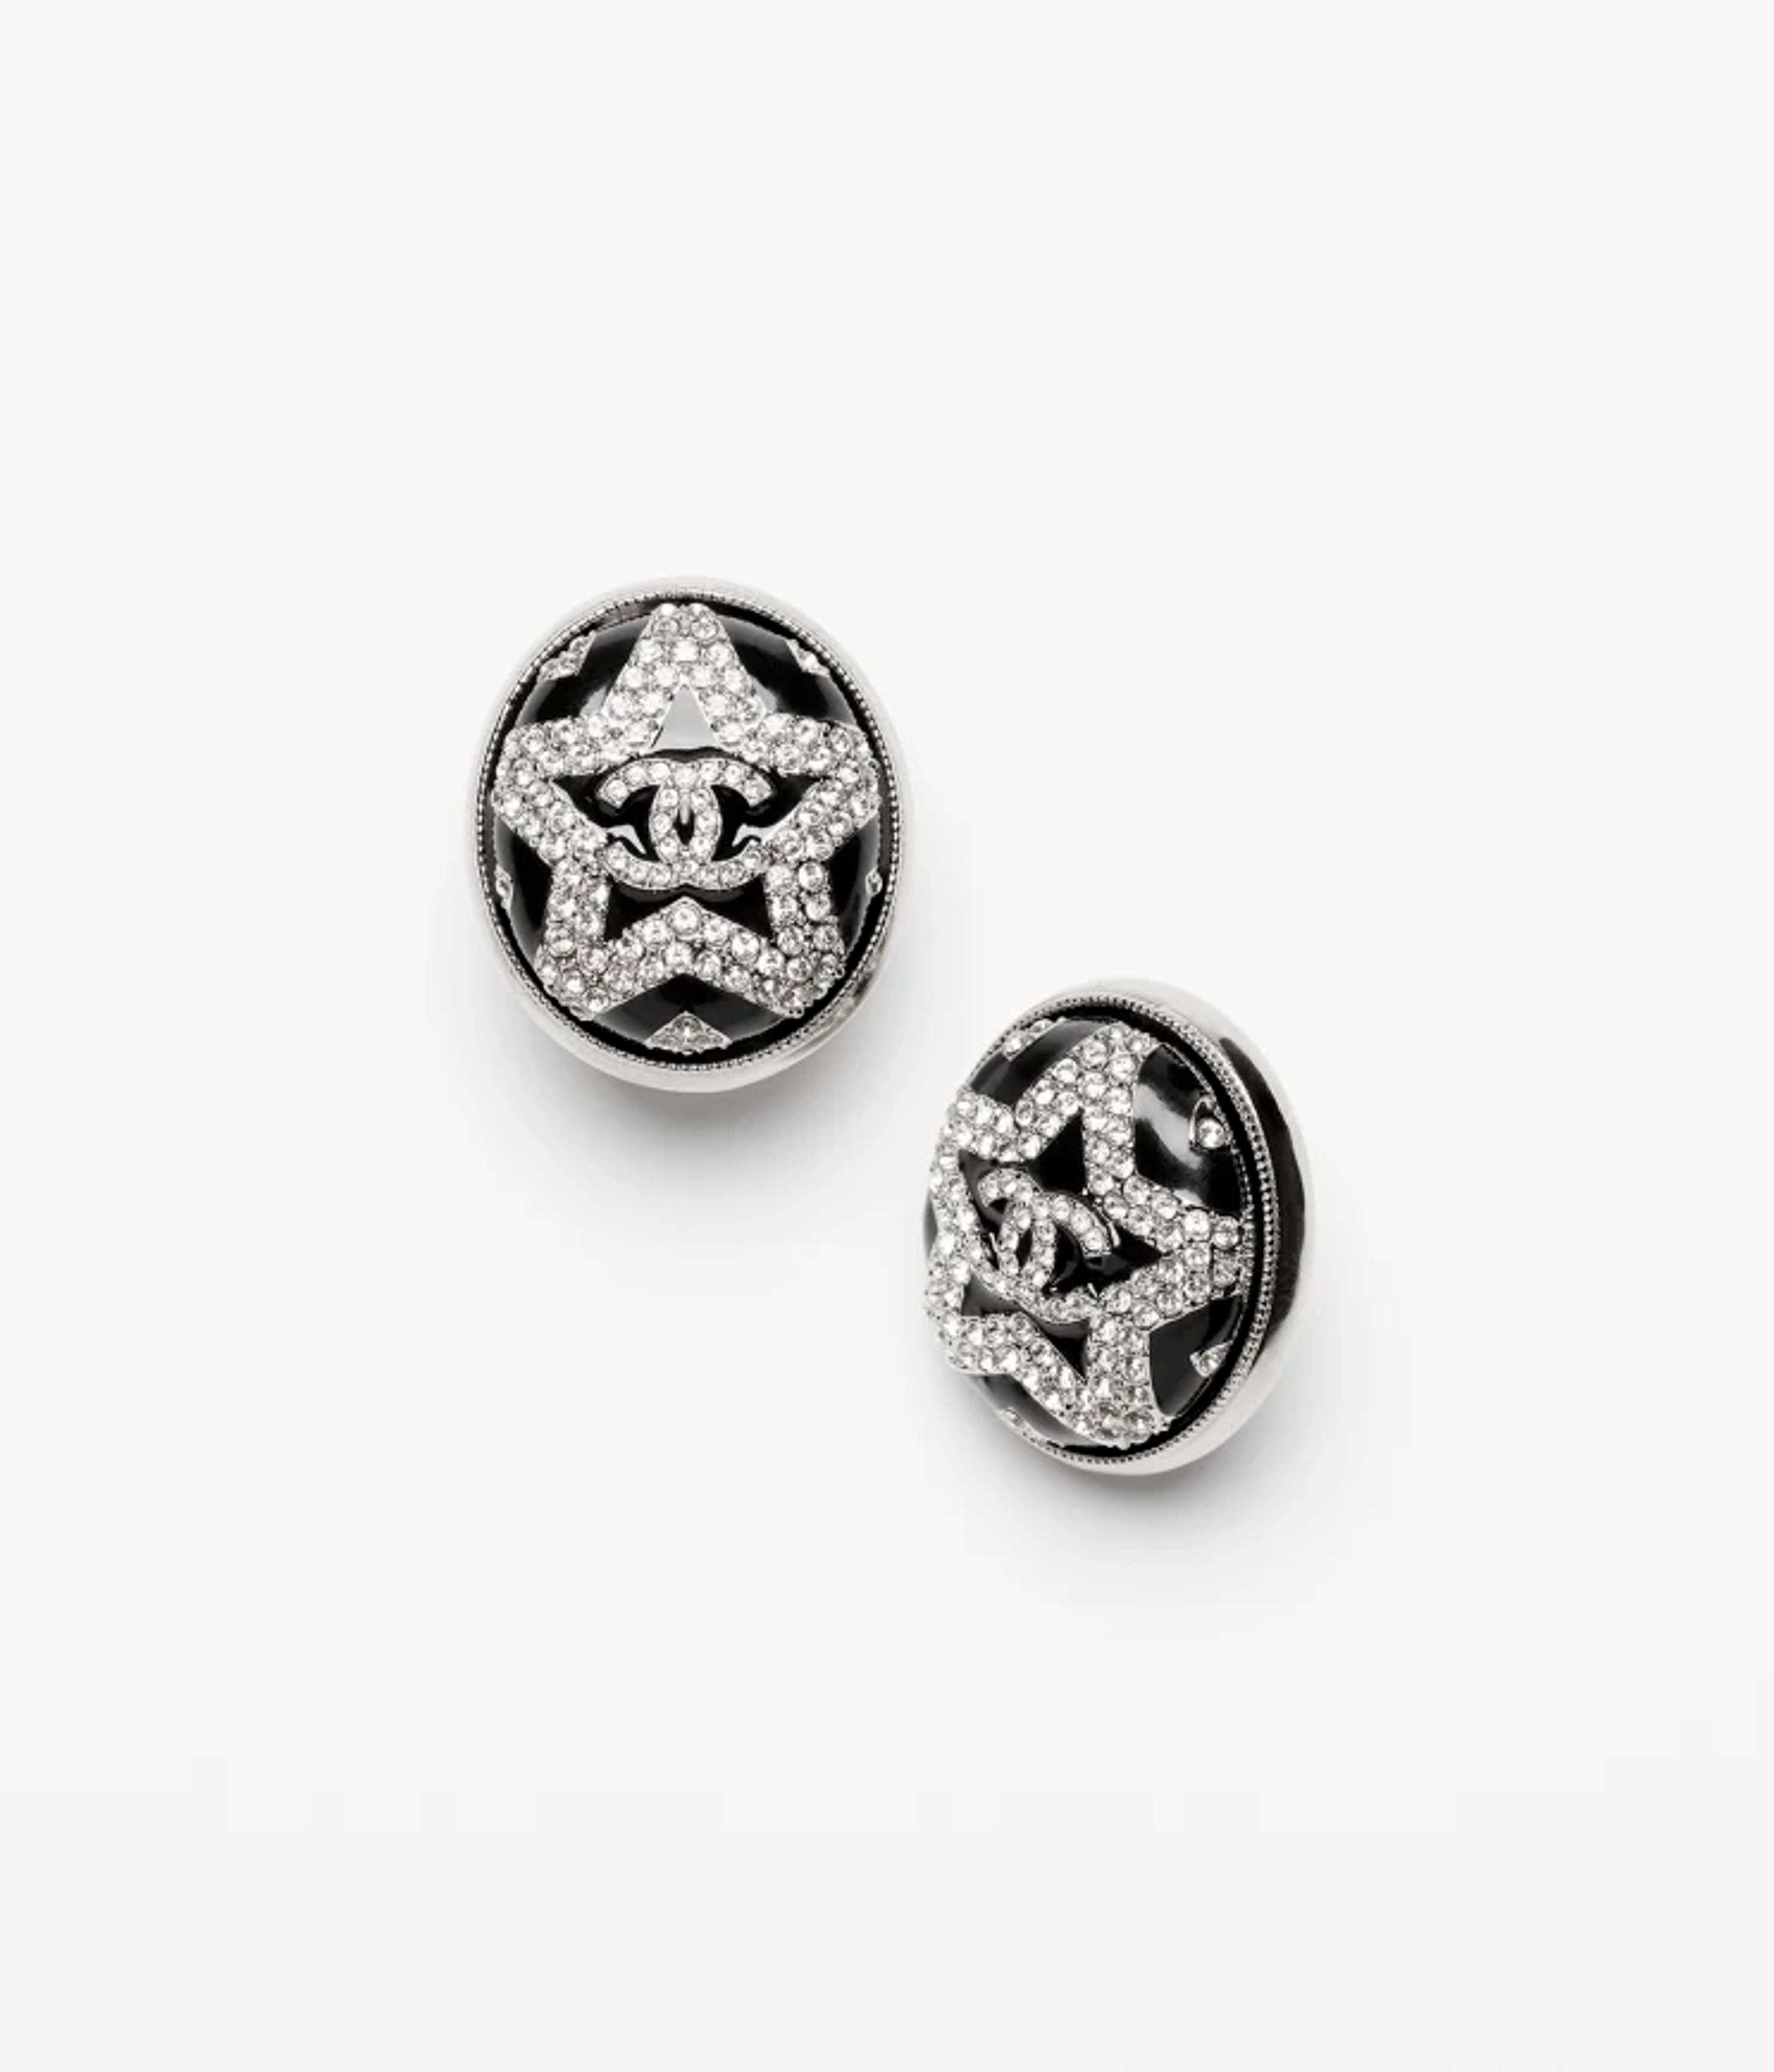 Stud earrings - Metal, resin & strass, silver, black & crystal — Fashion | CHANEL